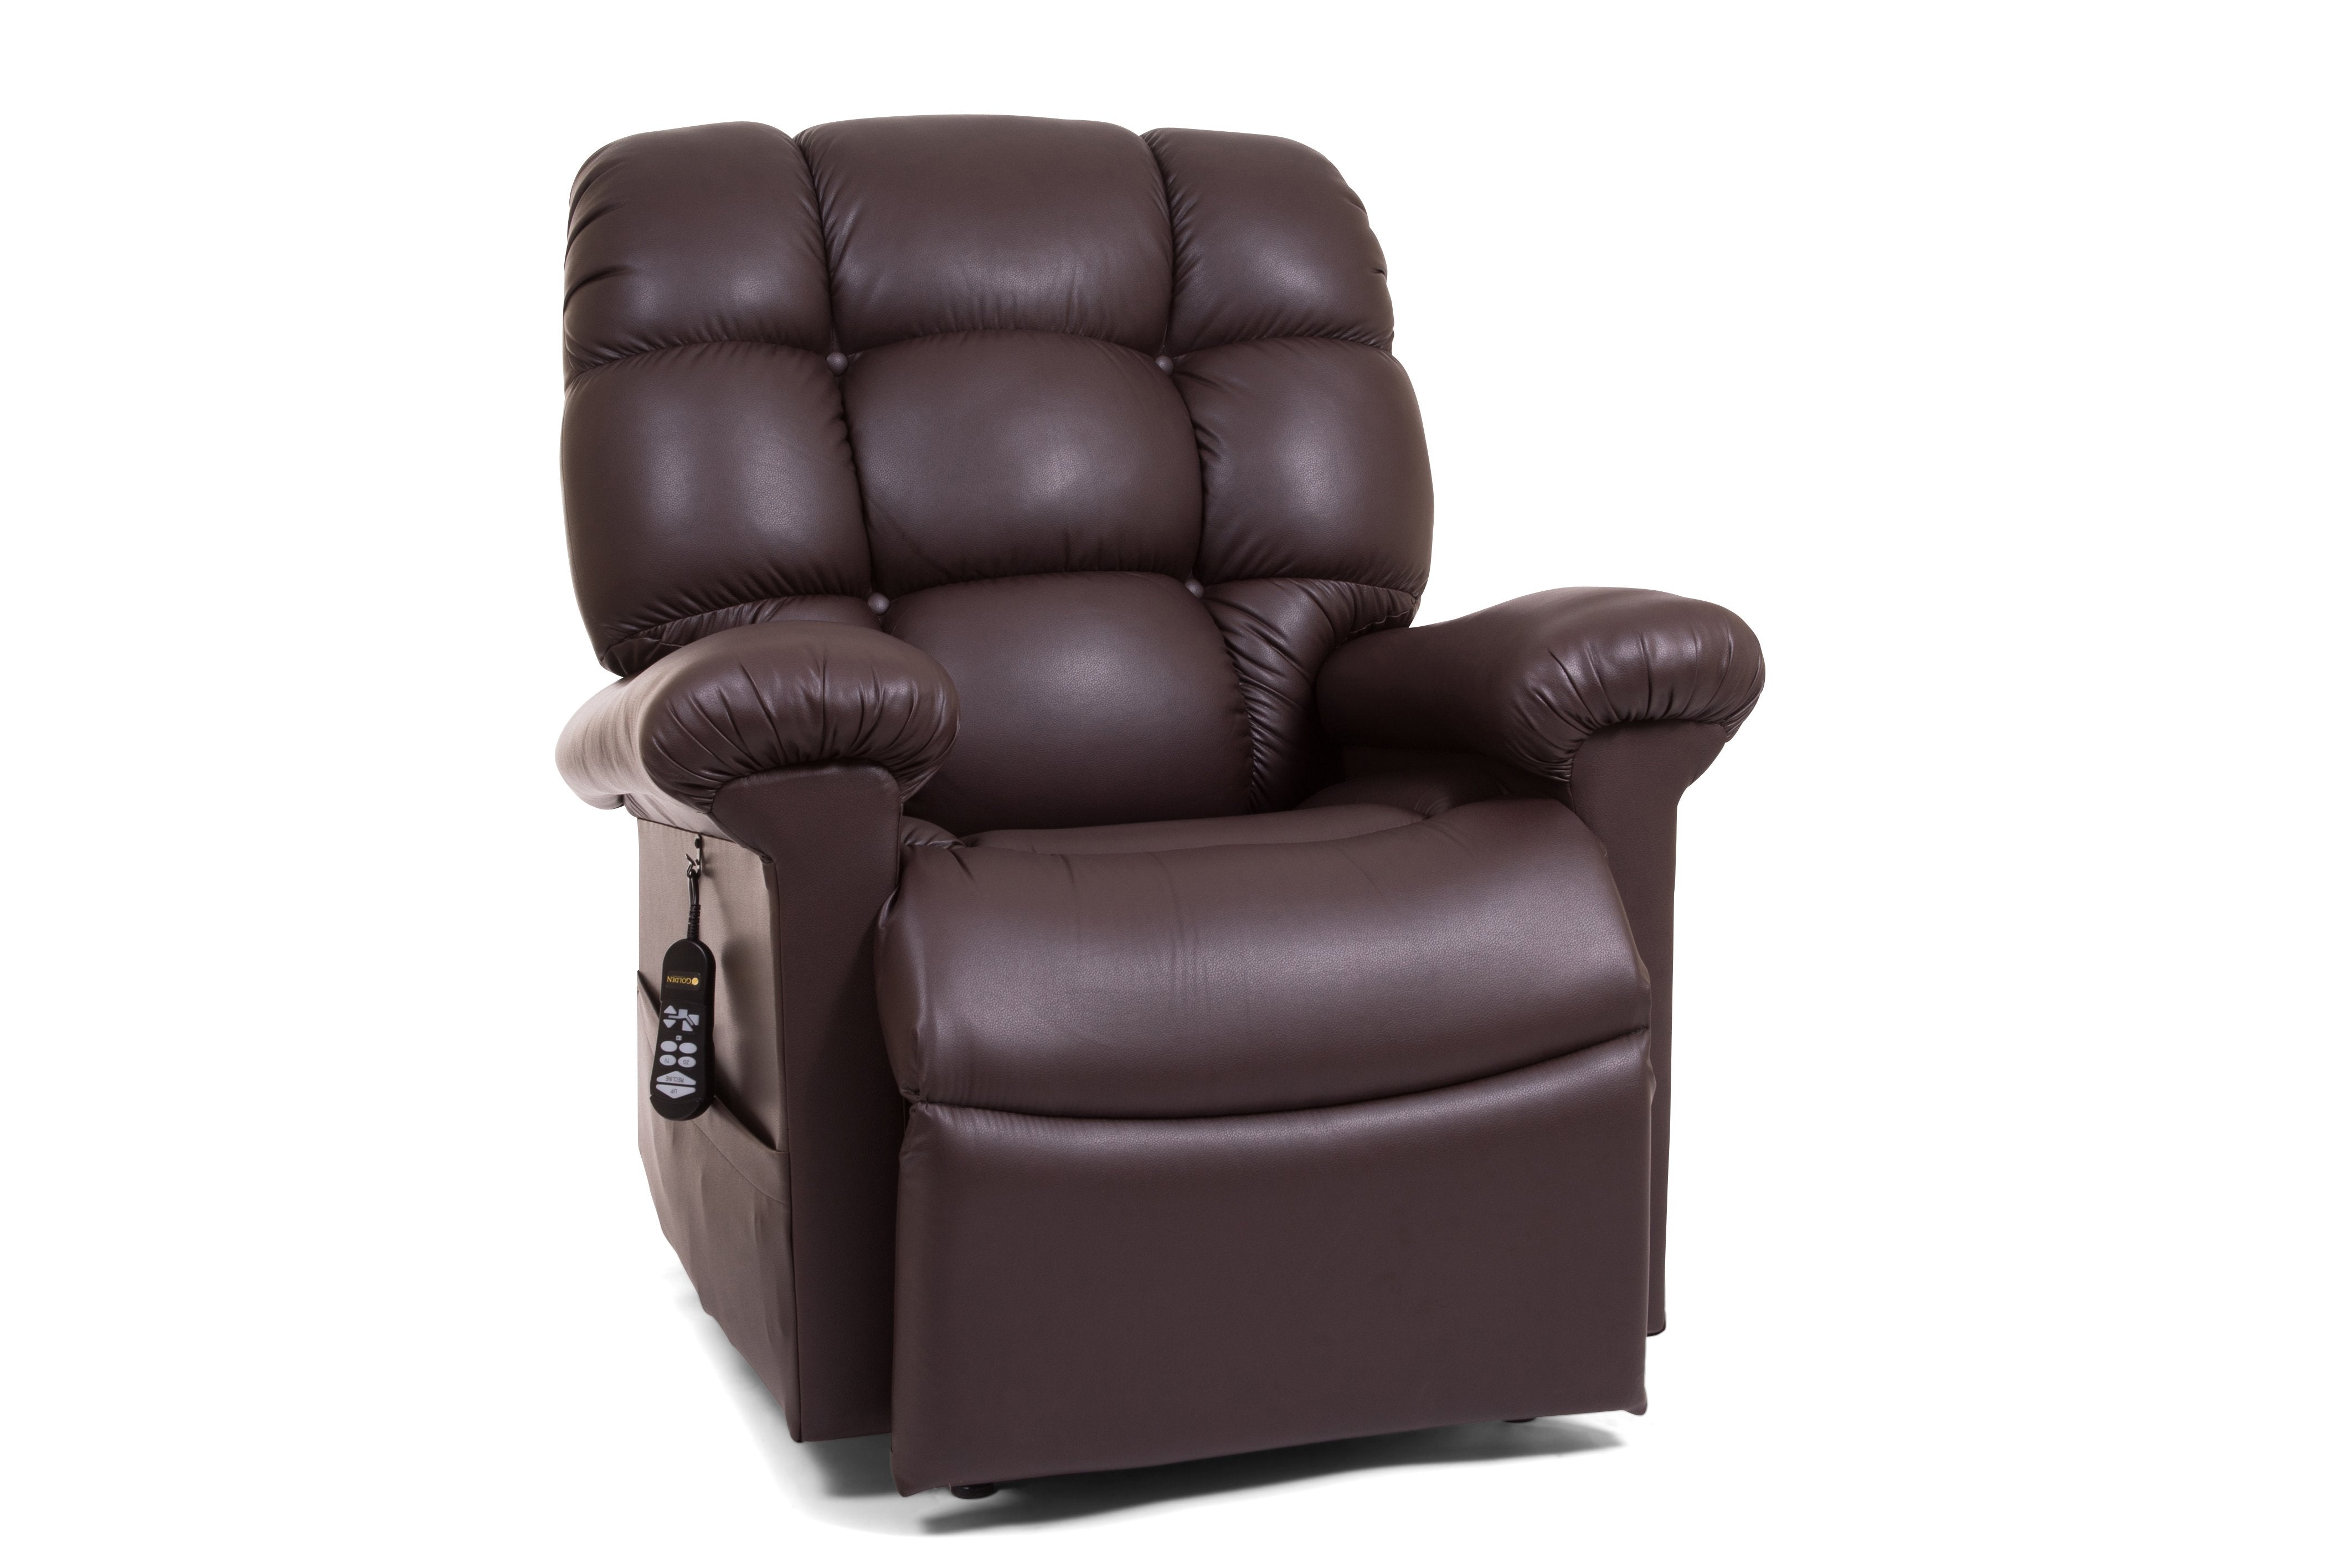 Cloud PR-510 Maxi-comfort Lift Chair